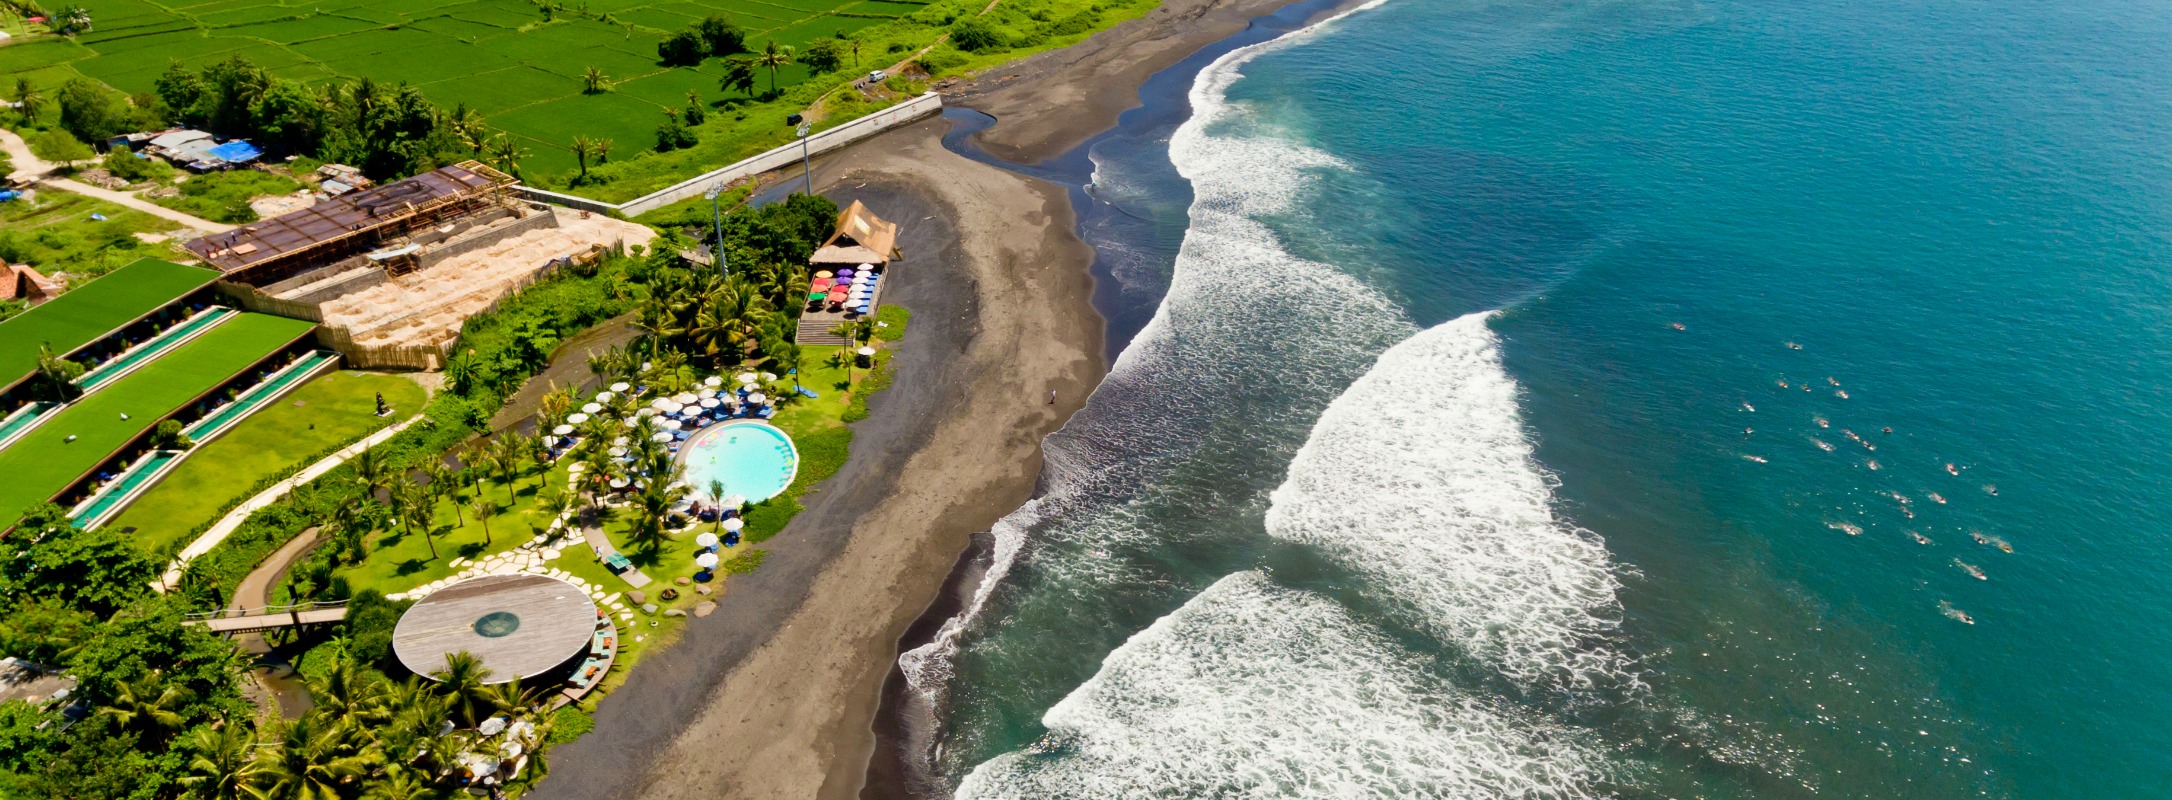  Keramas  Surf Spot Bali  Surf Indonesia 